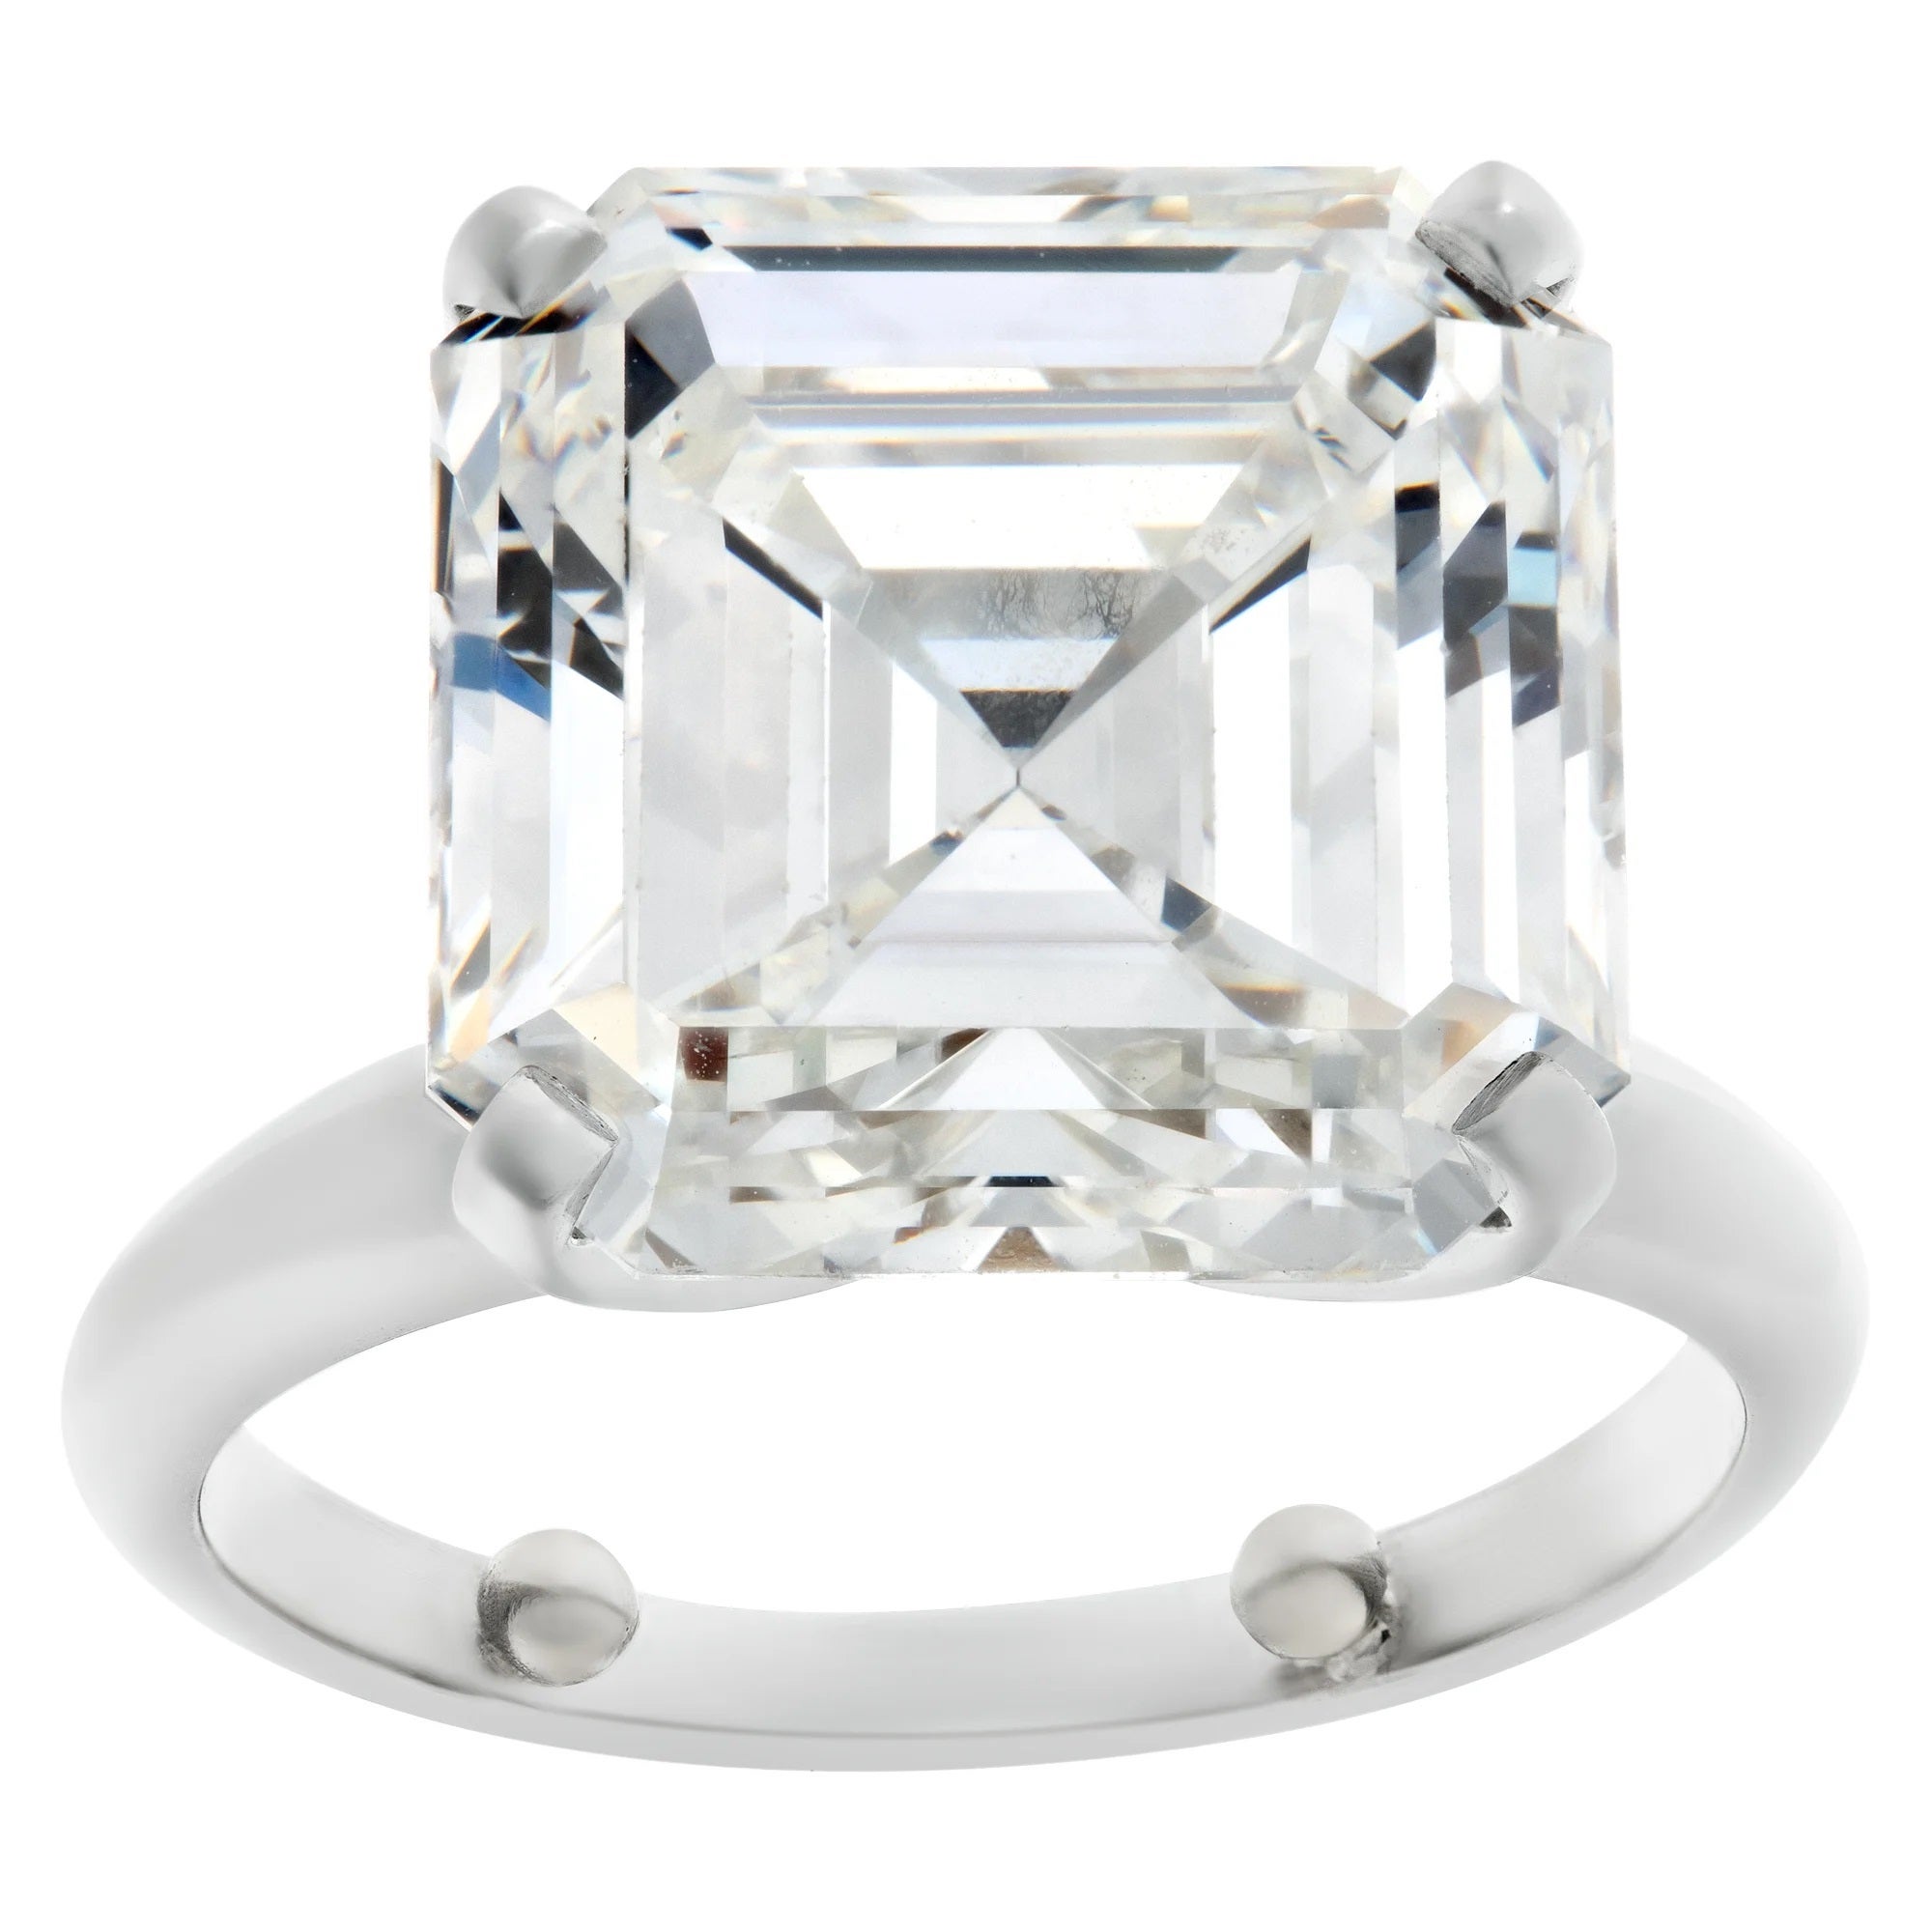 GIA Certified Asscher Cut Diamond 9.03 Carat 'G Color, VS 1 Clarity' Solitaire 